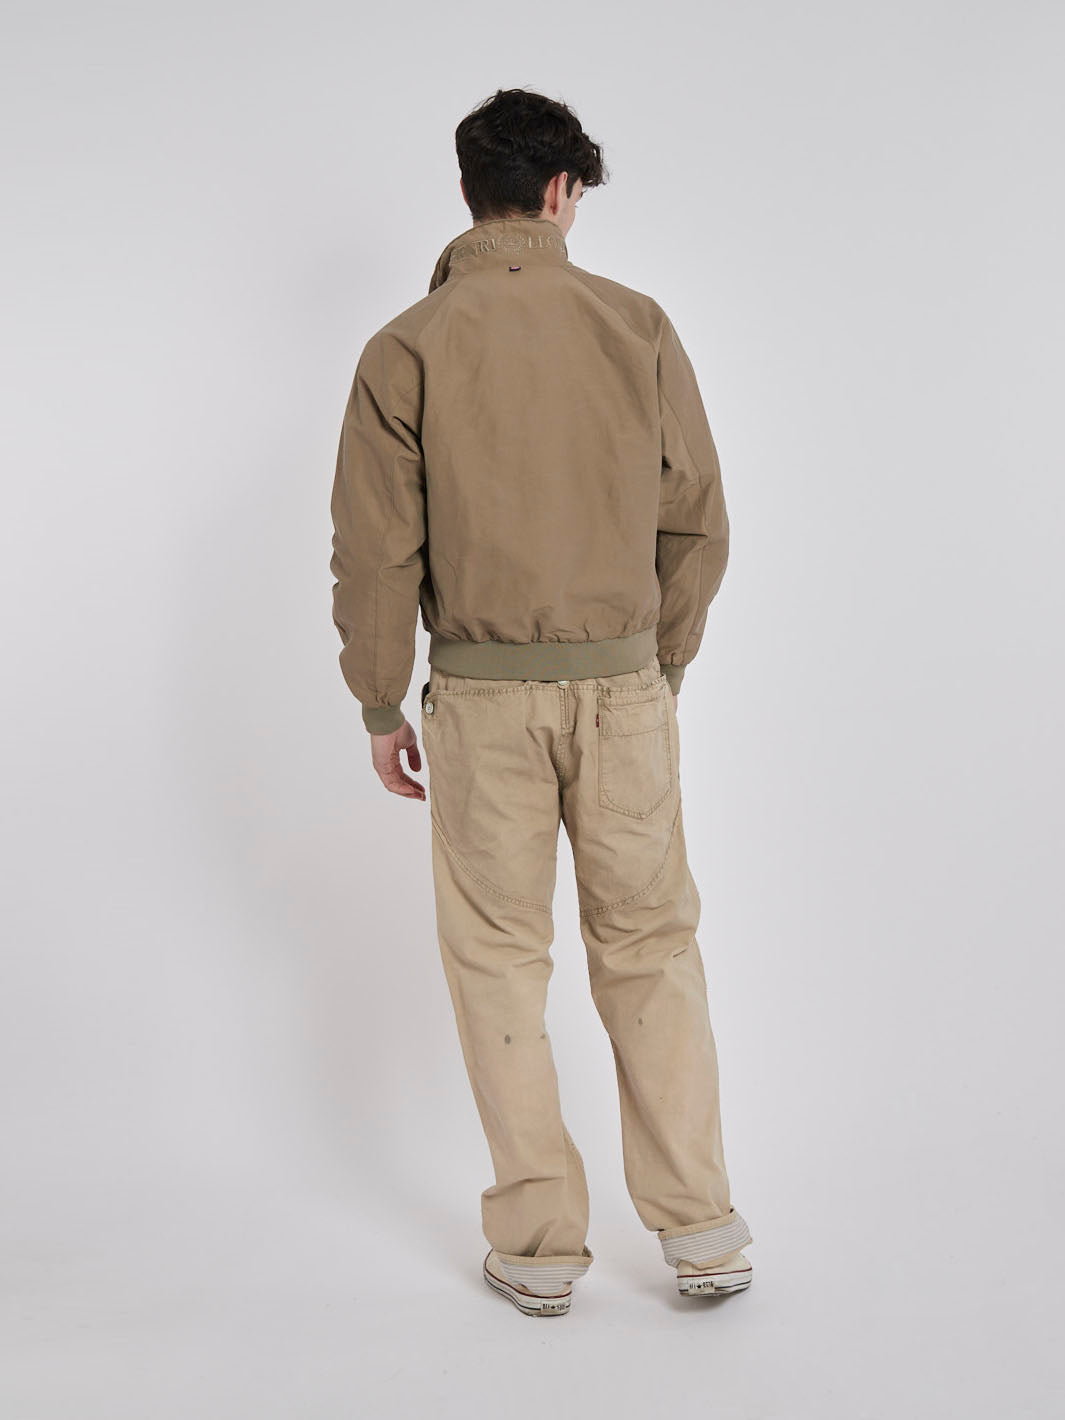 Y2K Henri Lloyd bomber jacket in light brown technical fabric